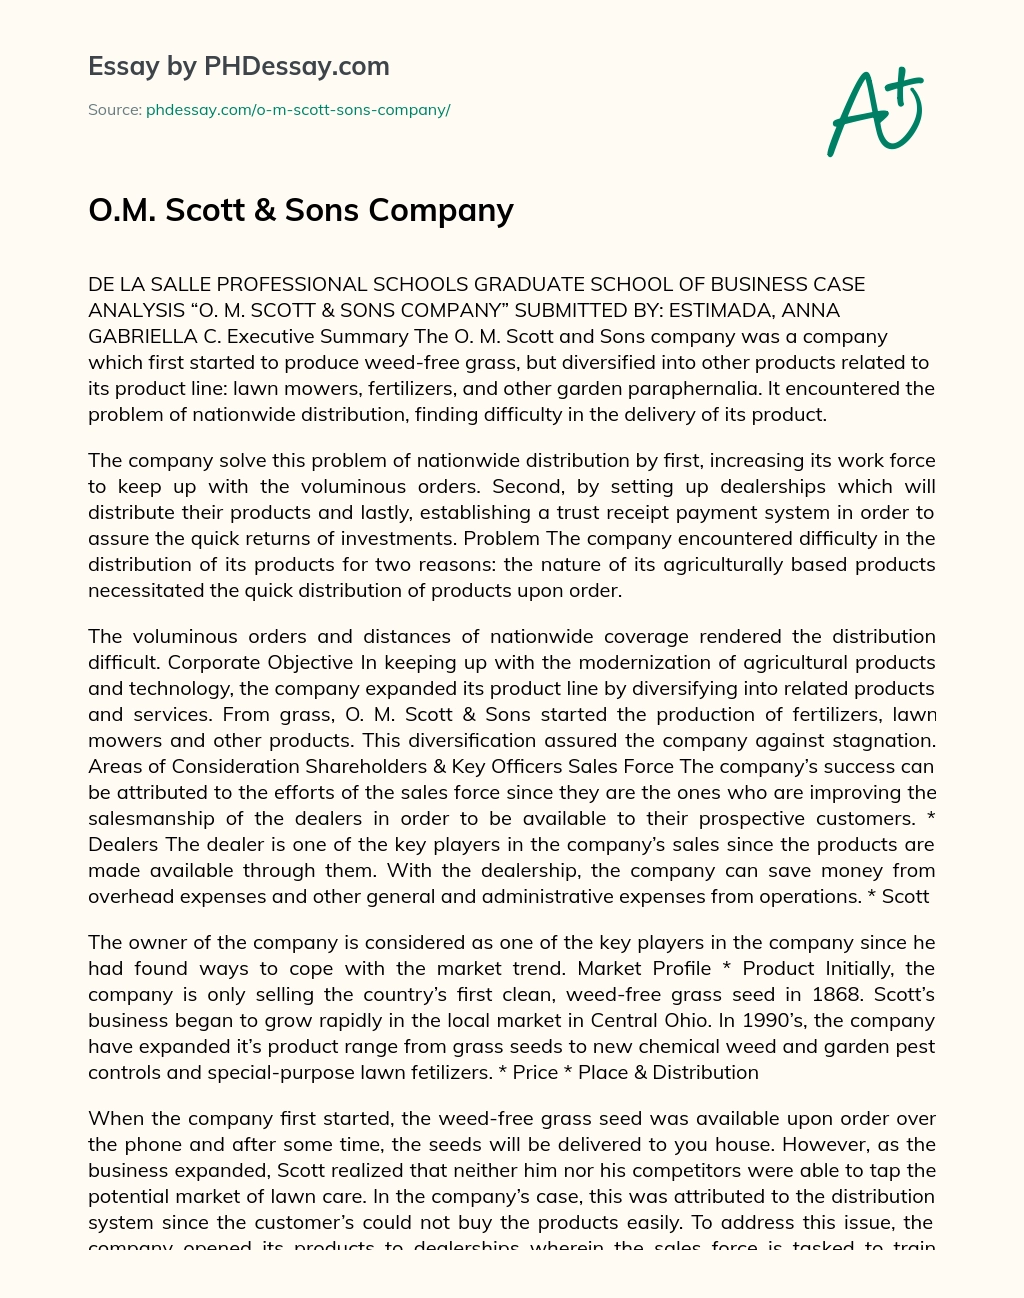 O.M. Scott & Sons Company essay